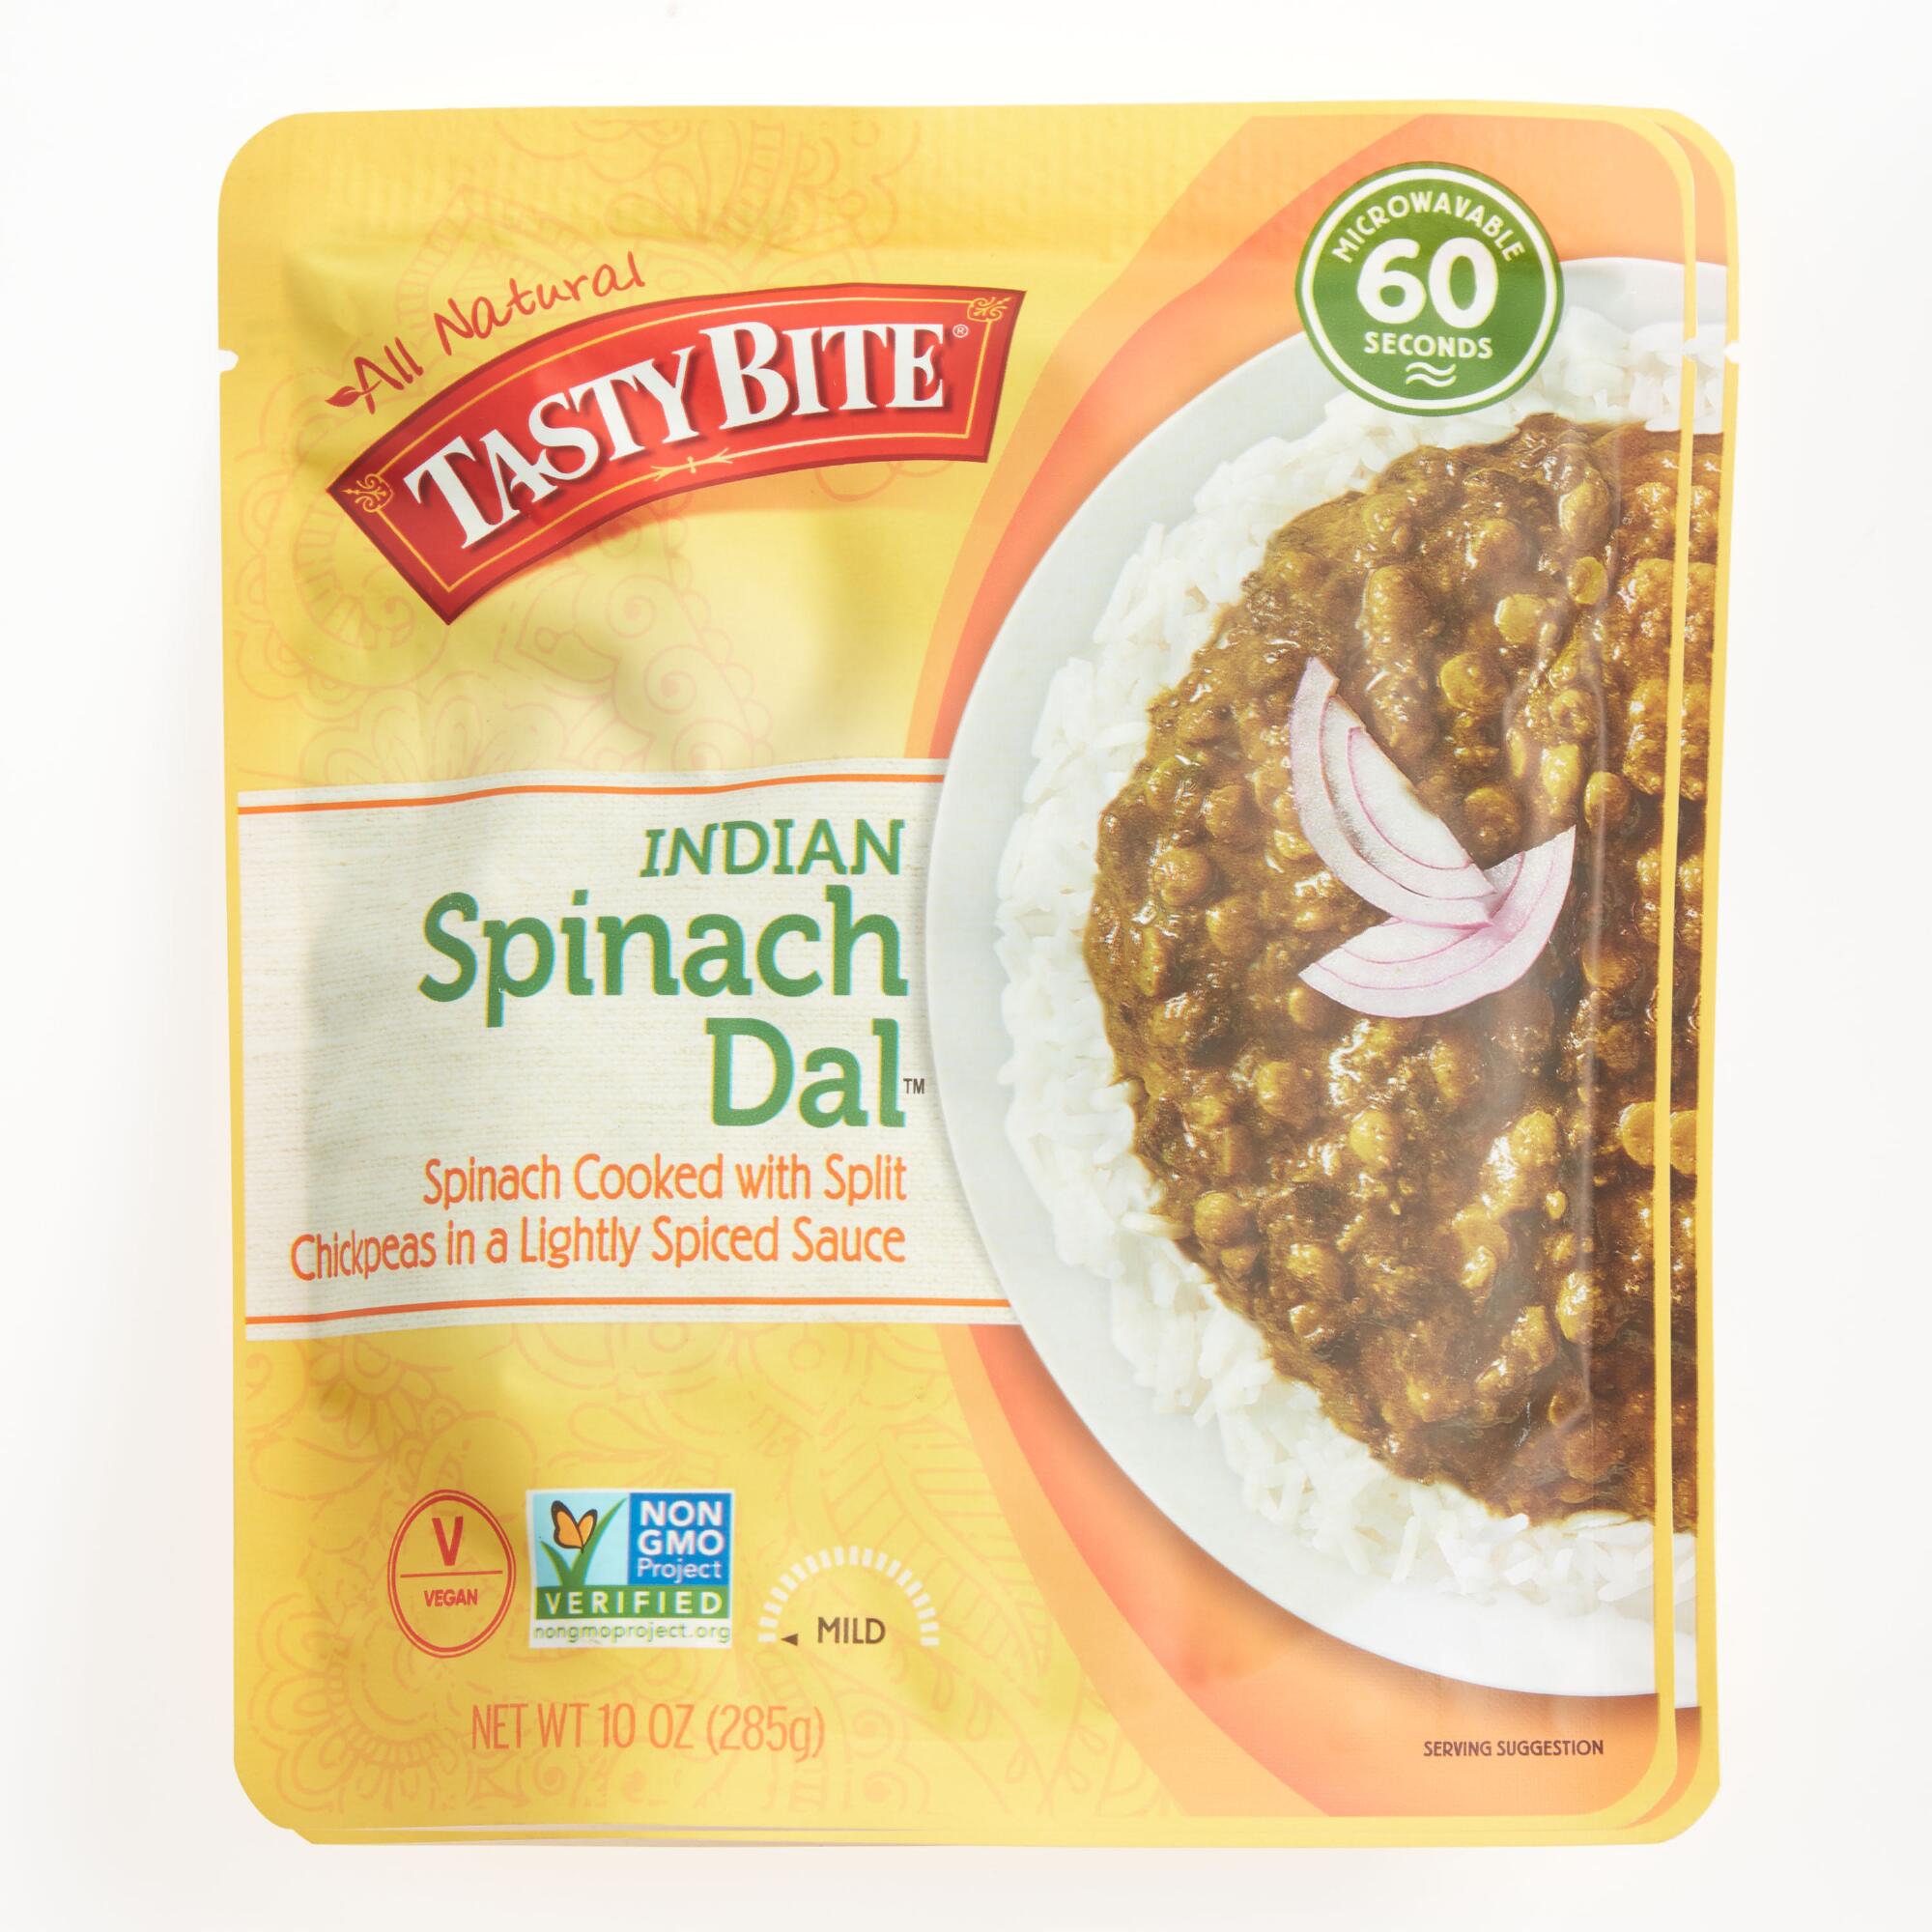 Tasty Bite Spinach Dal, Set of 6 by World Market